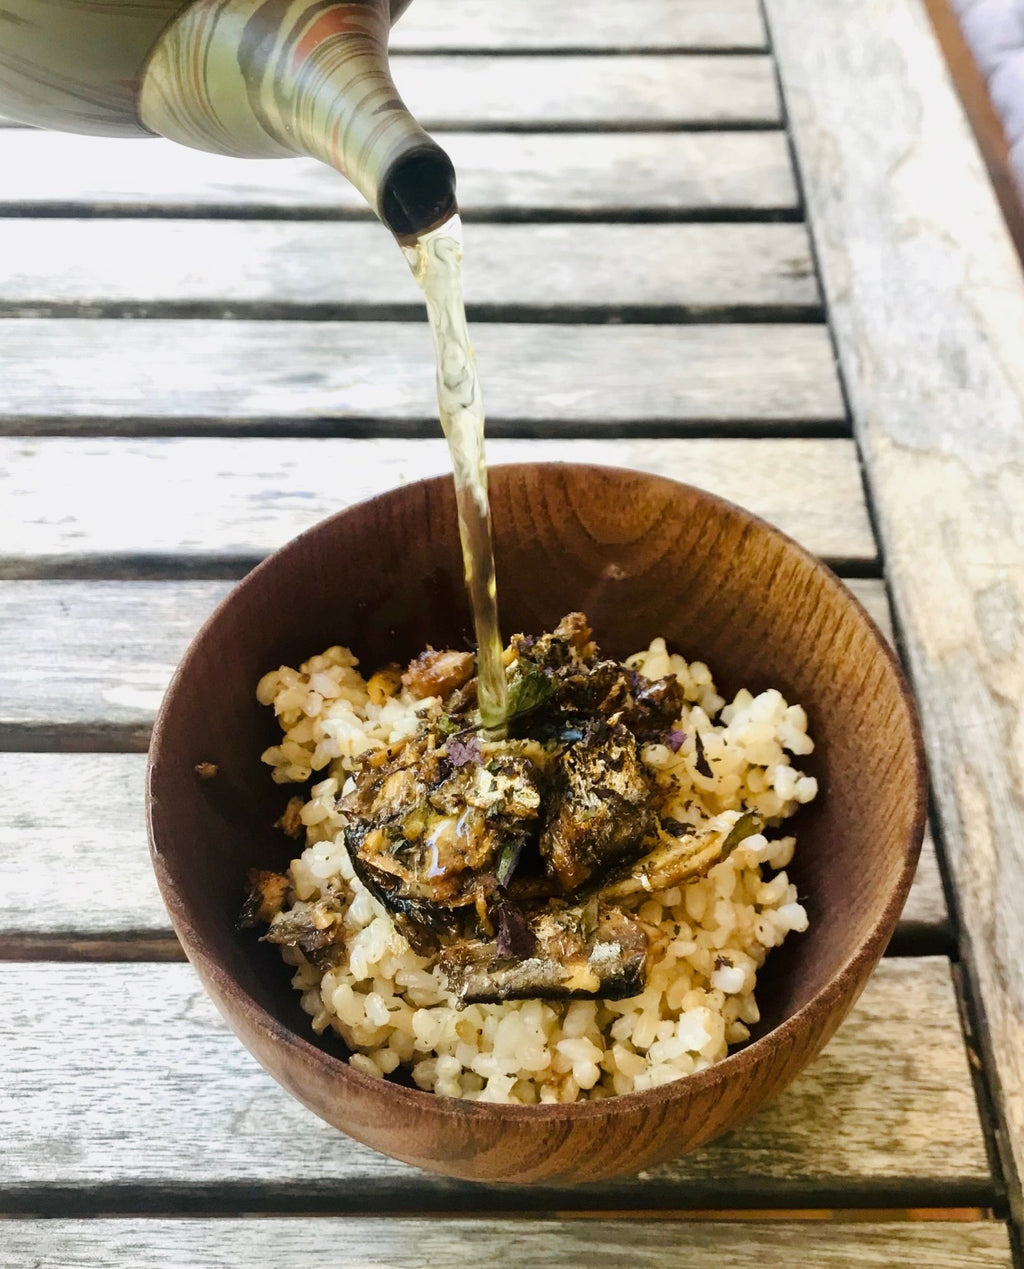 Bowl of Rice Food Sample Memo Holder Kit